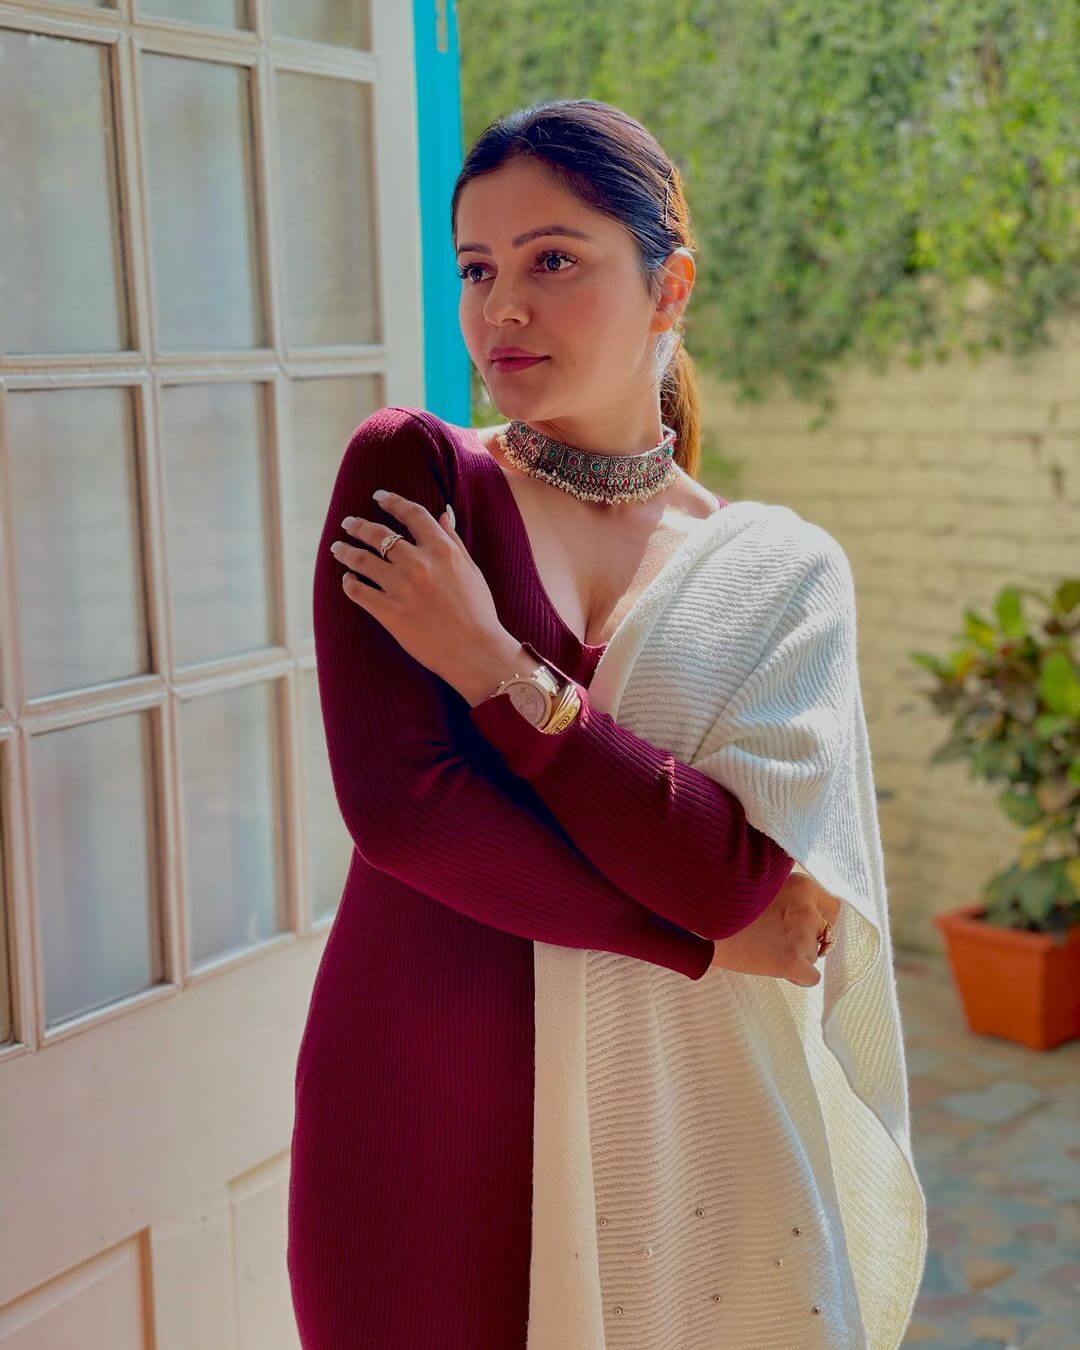 Actress Rubina Dilaik  In The Figure-Hugging Burgundy Knitwear Dress 